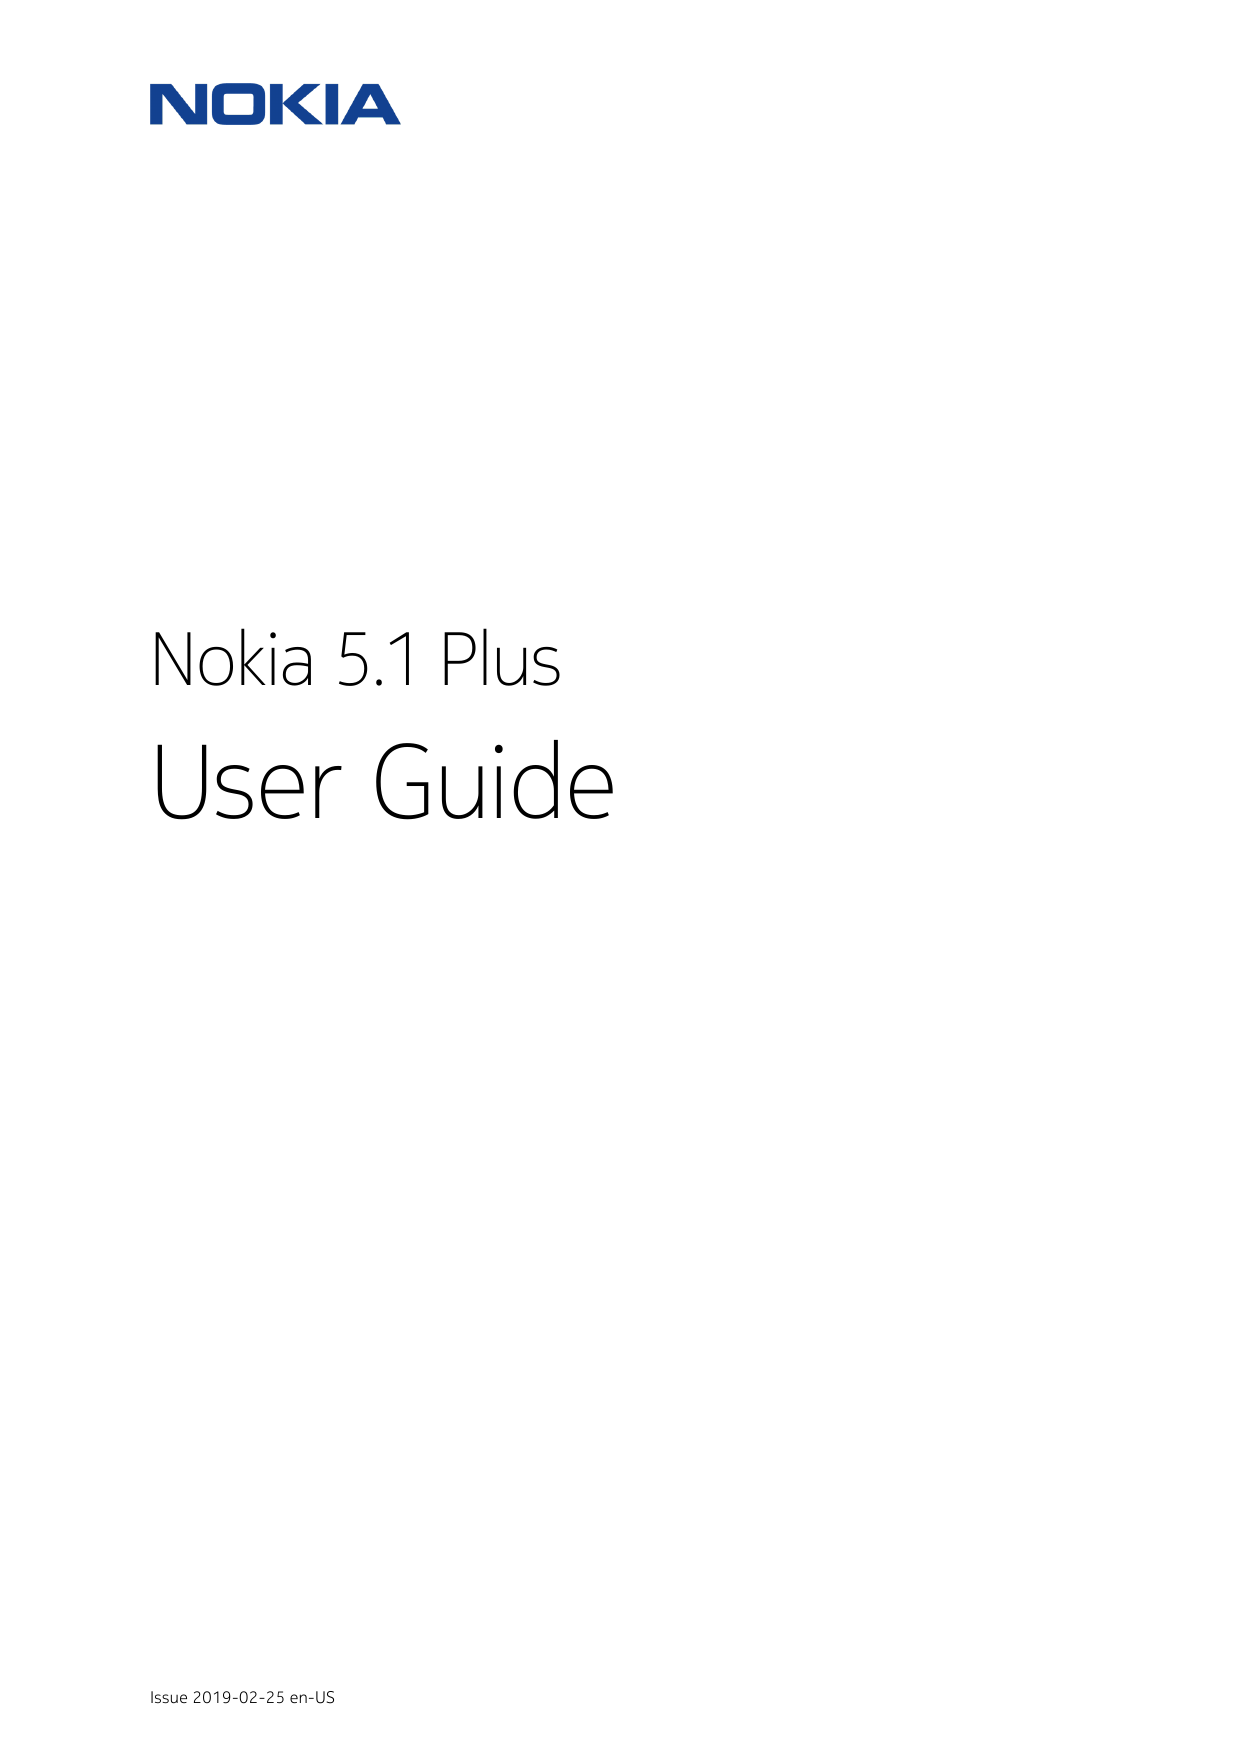 Nokia 5.1 PlusUser GuideIssue 2019-02-25 en-US